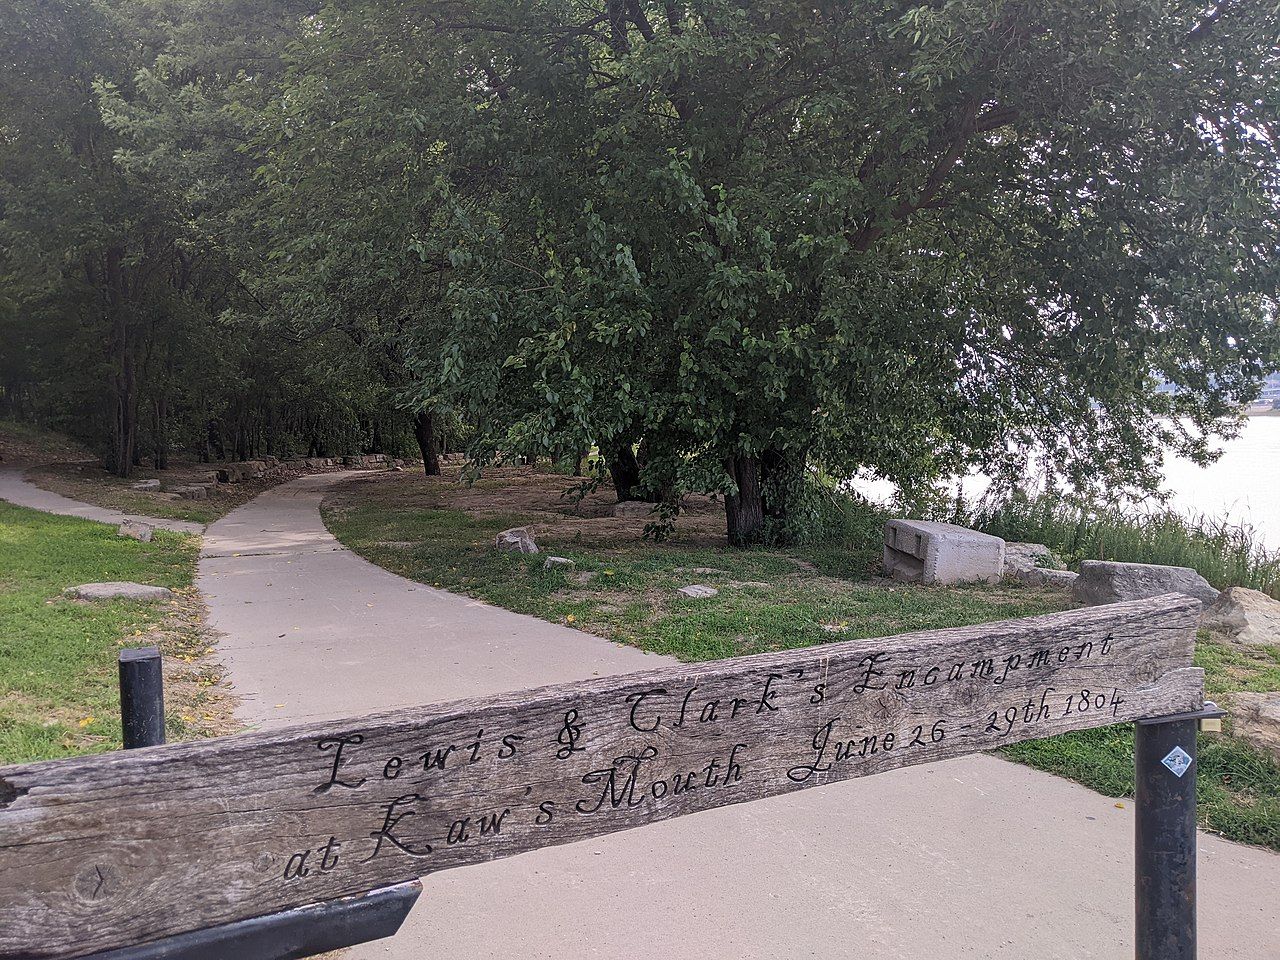 Wooden sign commemorating the Lewis and Clark encampment at Kaw Point Park, Kansas City, Kansas, USA